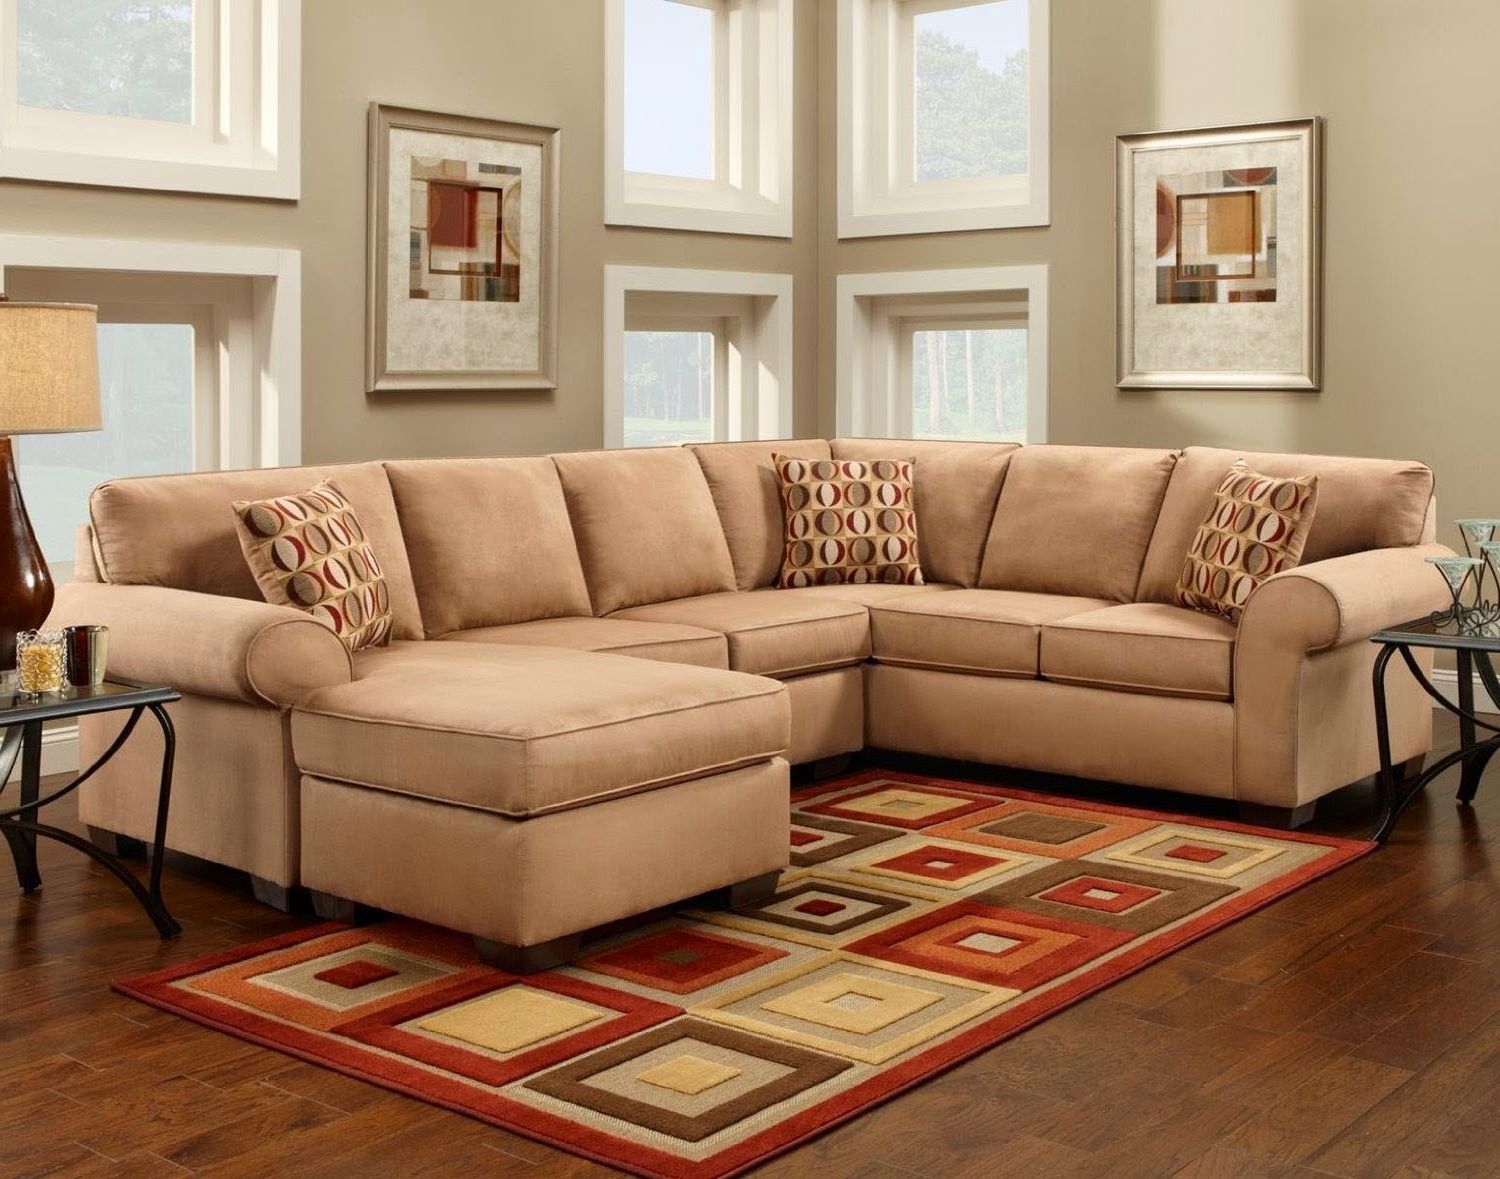 3 Popular Main Colors In Microfiber Sectional Sleeper Sofa In Microfiber Sectional Corner Sofas (View 15 of 20)